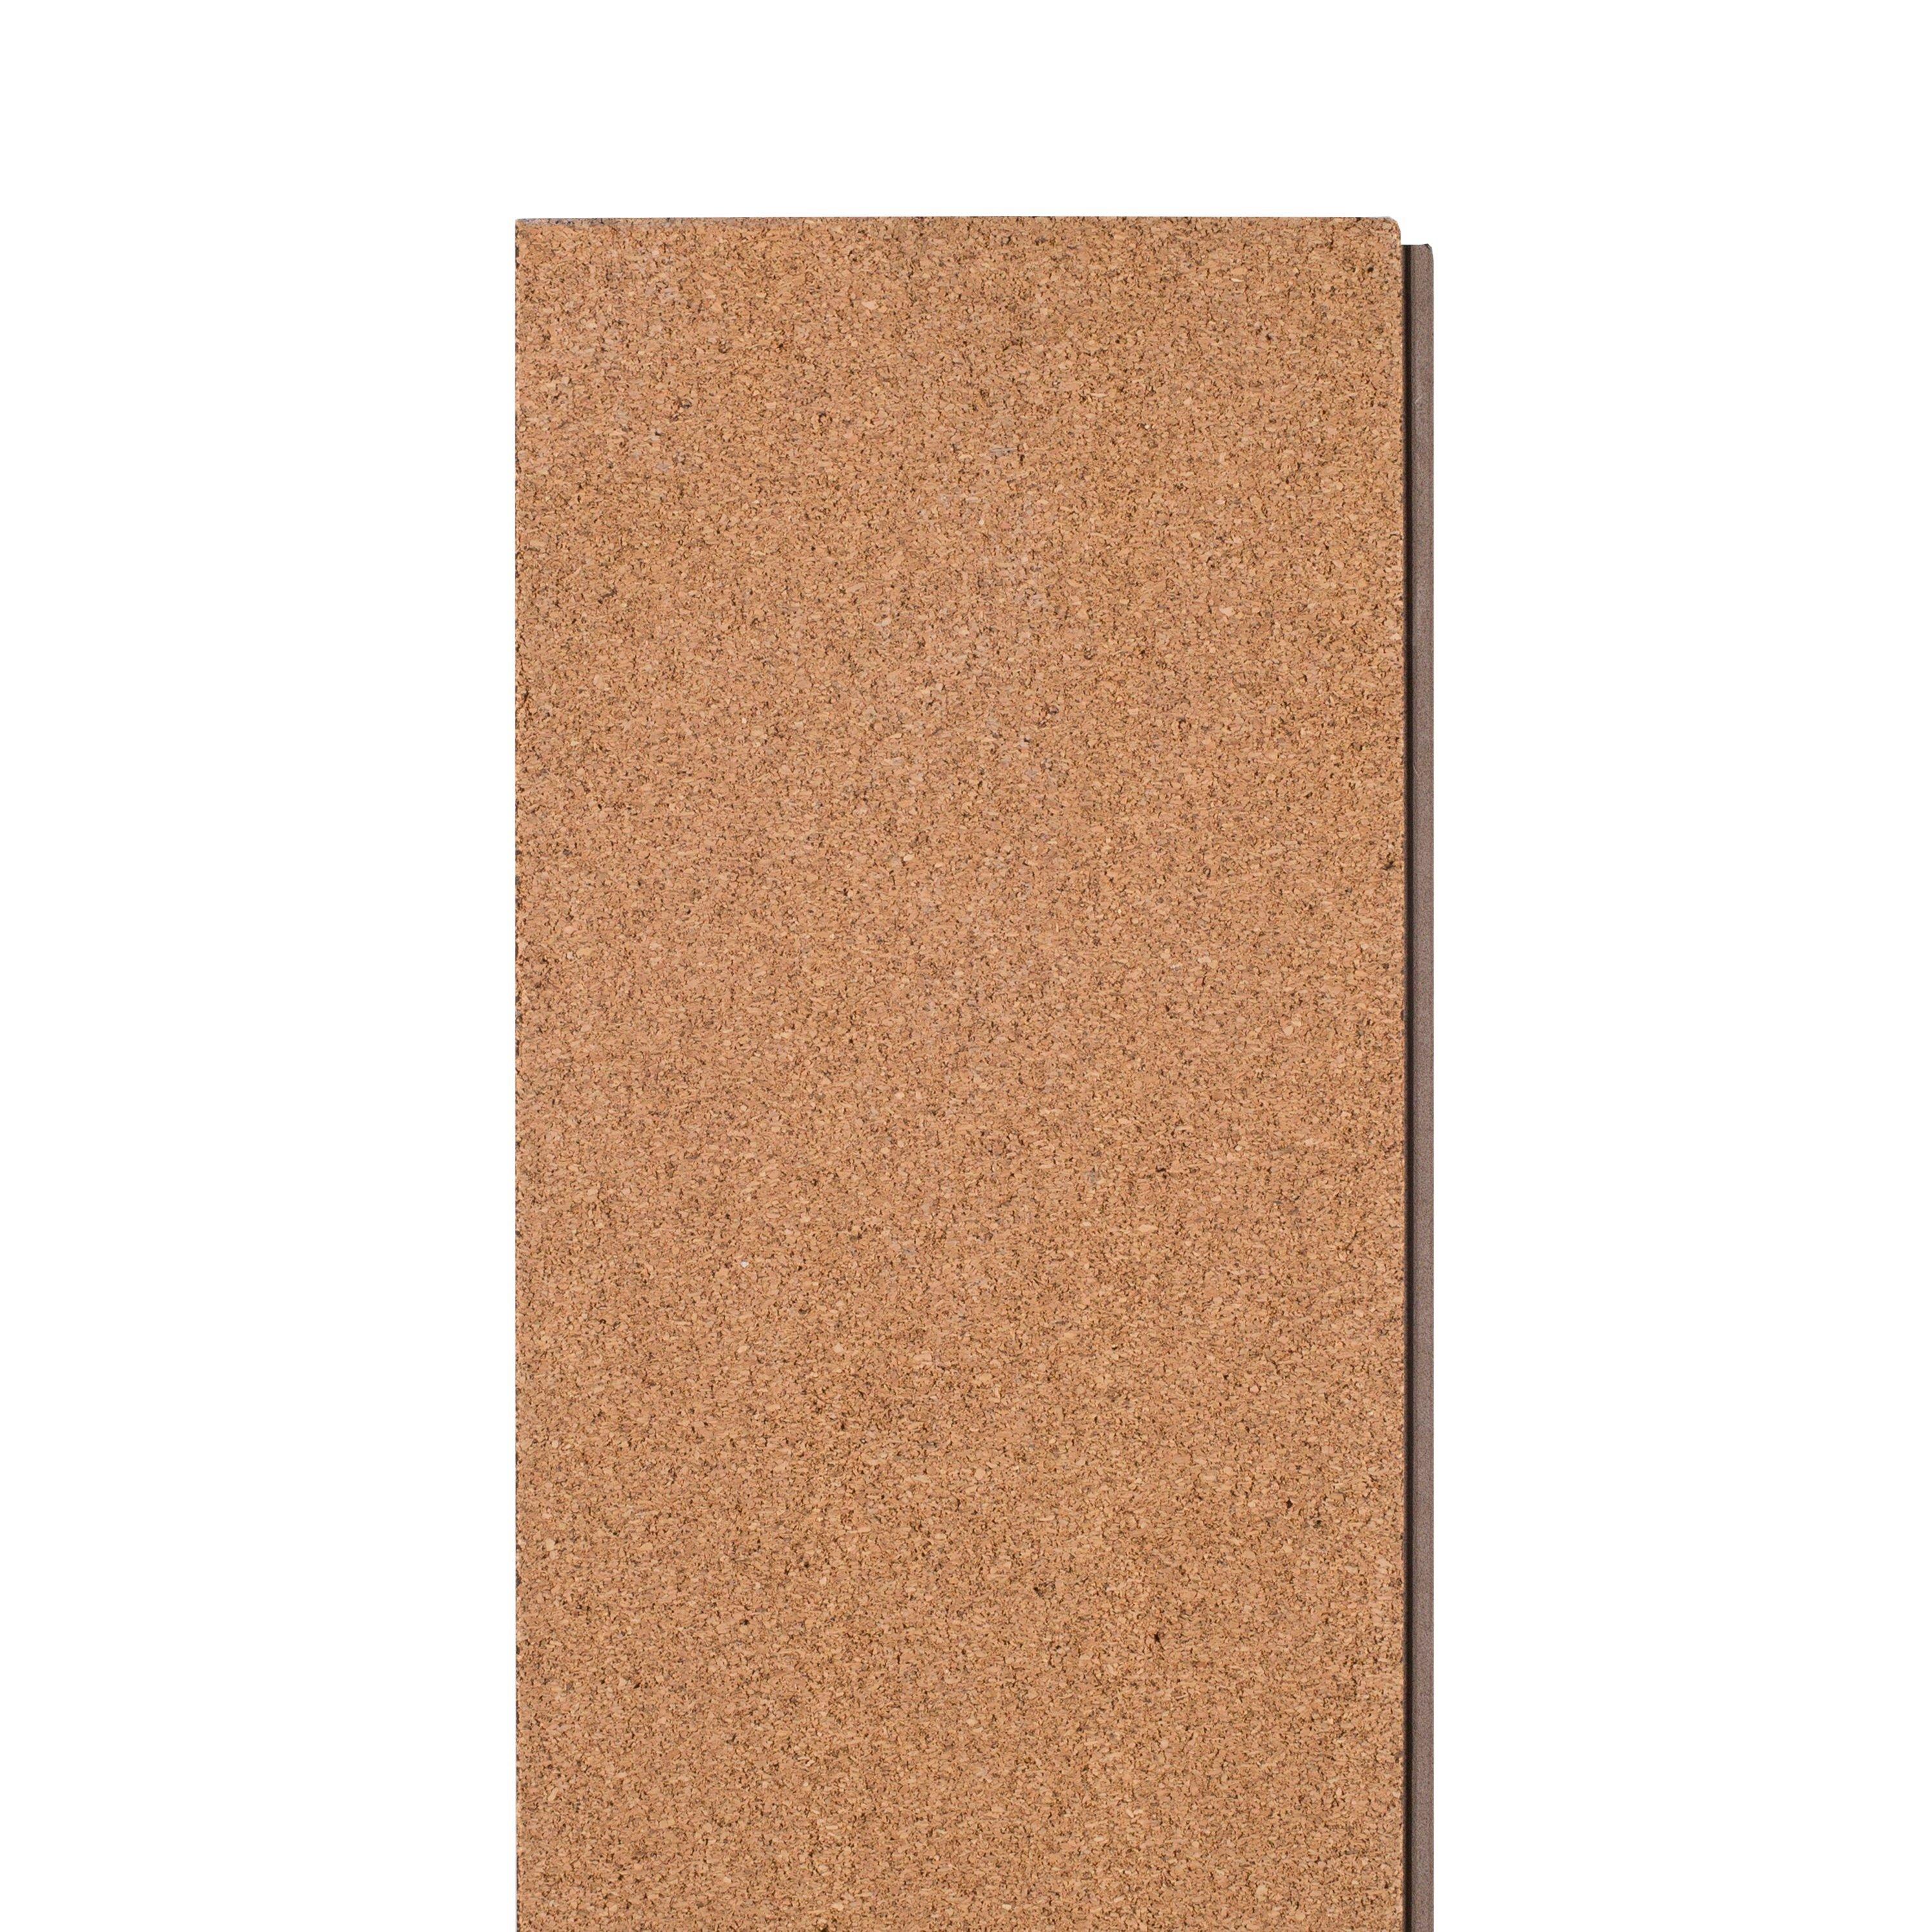 Autumn Acacia Rigid Core Luxury Vinyl Plank - Cork Back